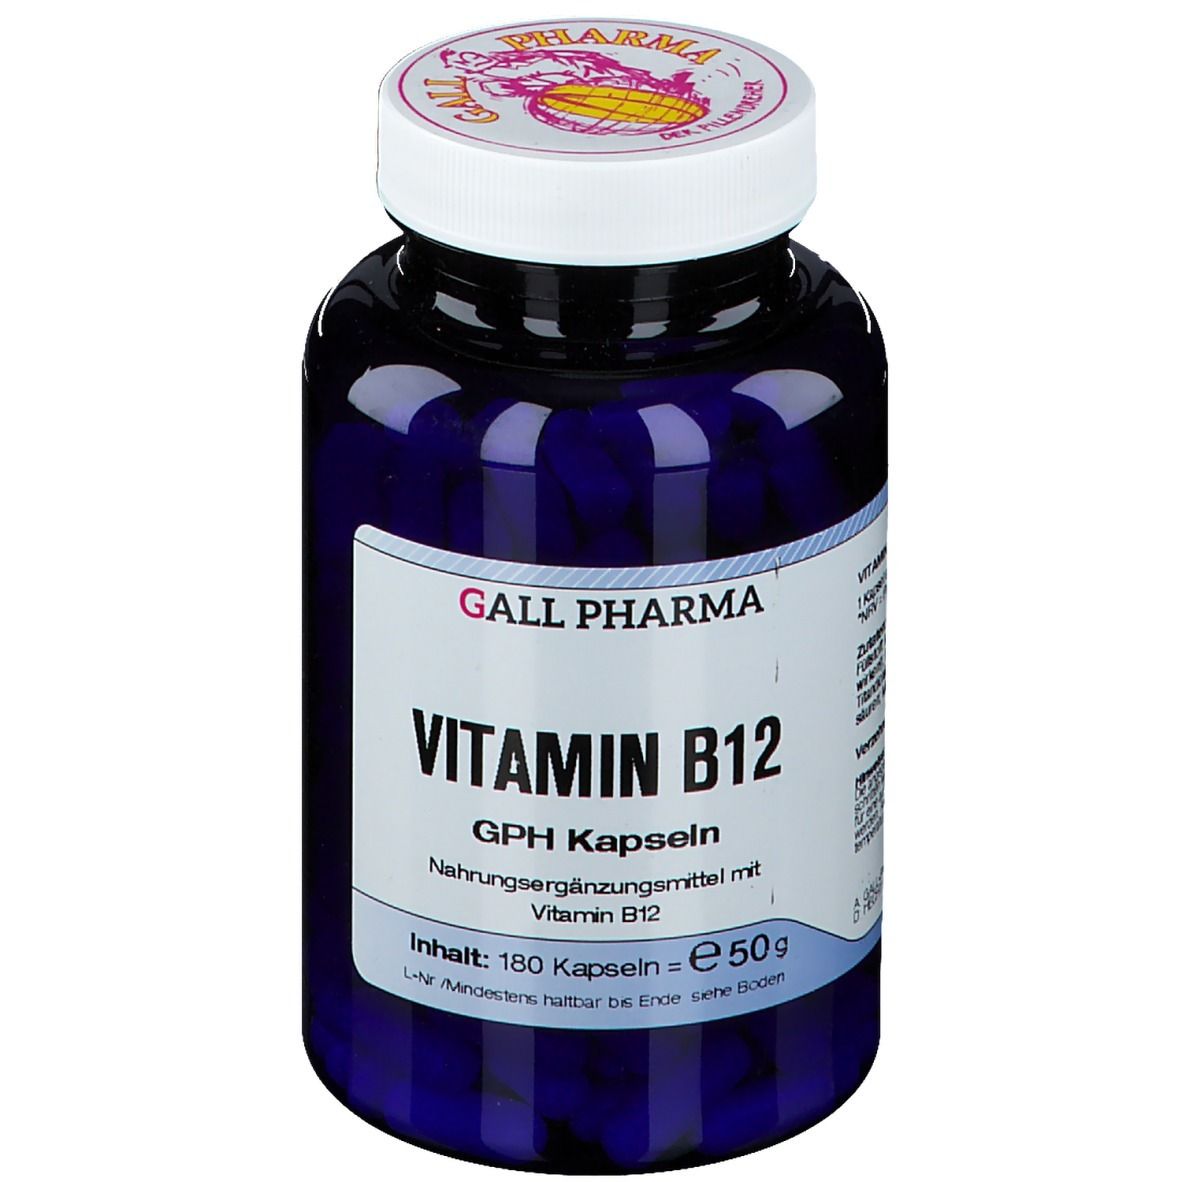 Gall Pharma Vitamin B12